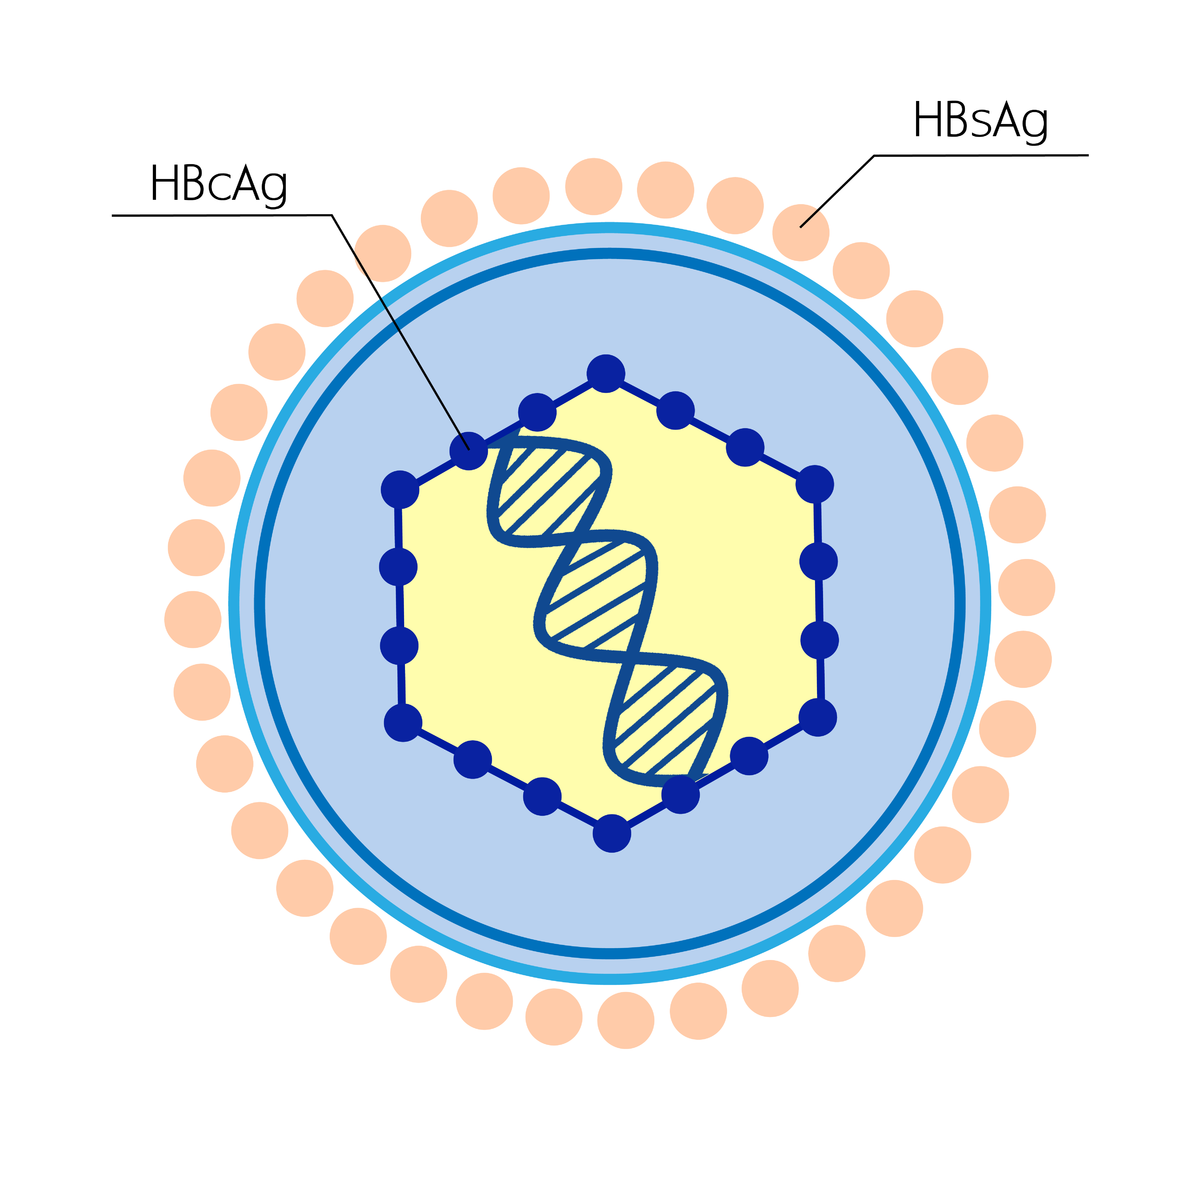 Антигену вируса гепатита в hbsag. HBS антиген гепатита b. Вирус гепатита б HBSAG. Антигенная структура вируса гепатита в (HBV). HBS антиген вируса гепатита в.